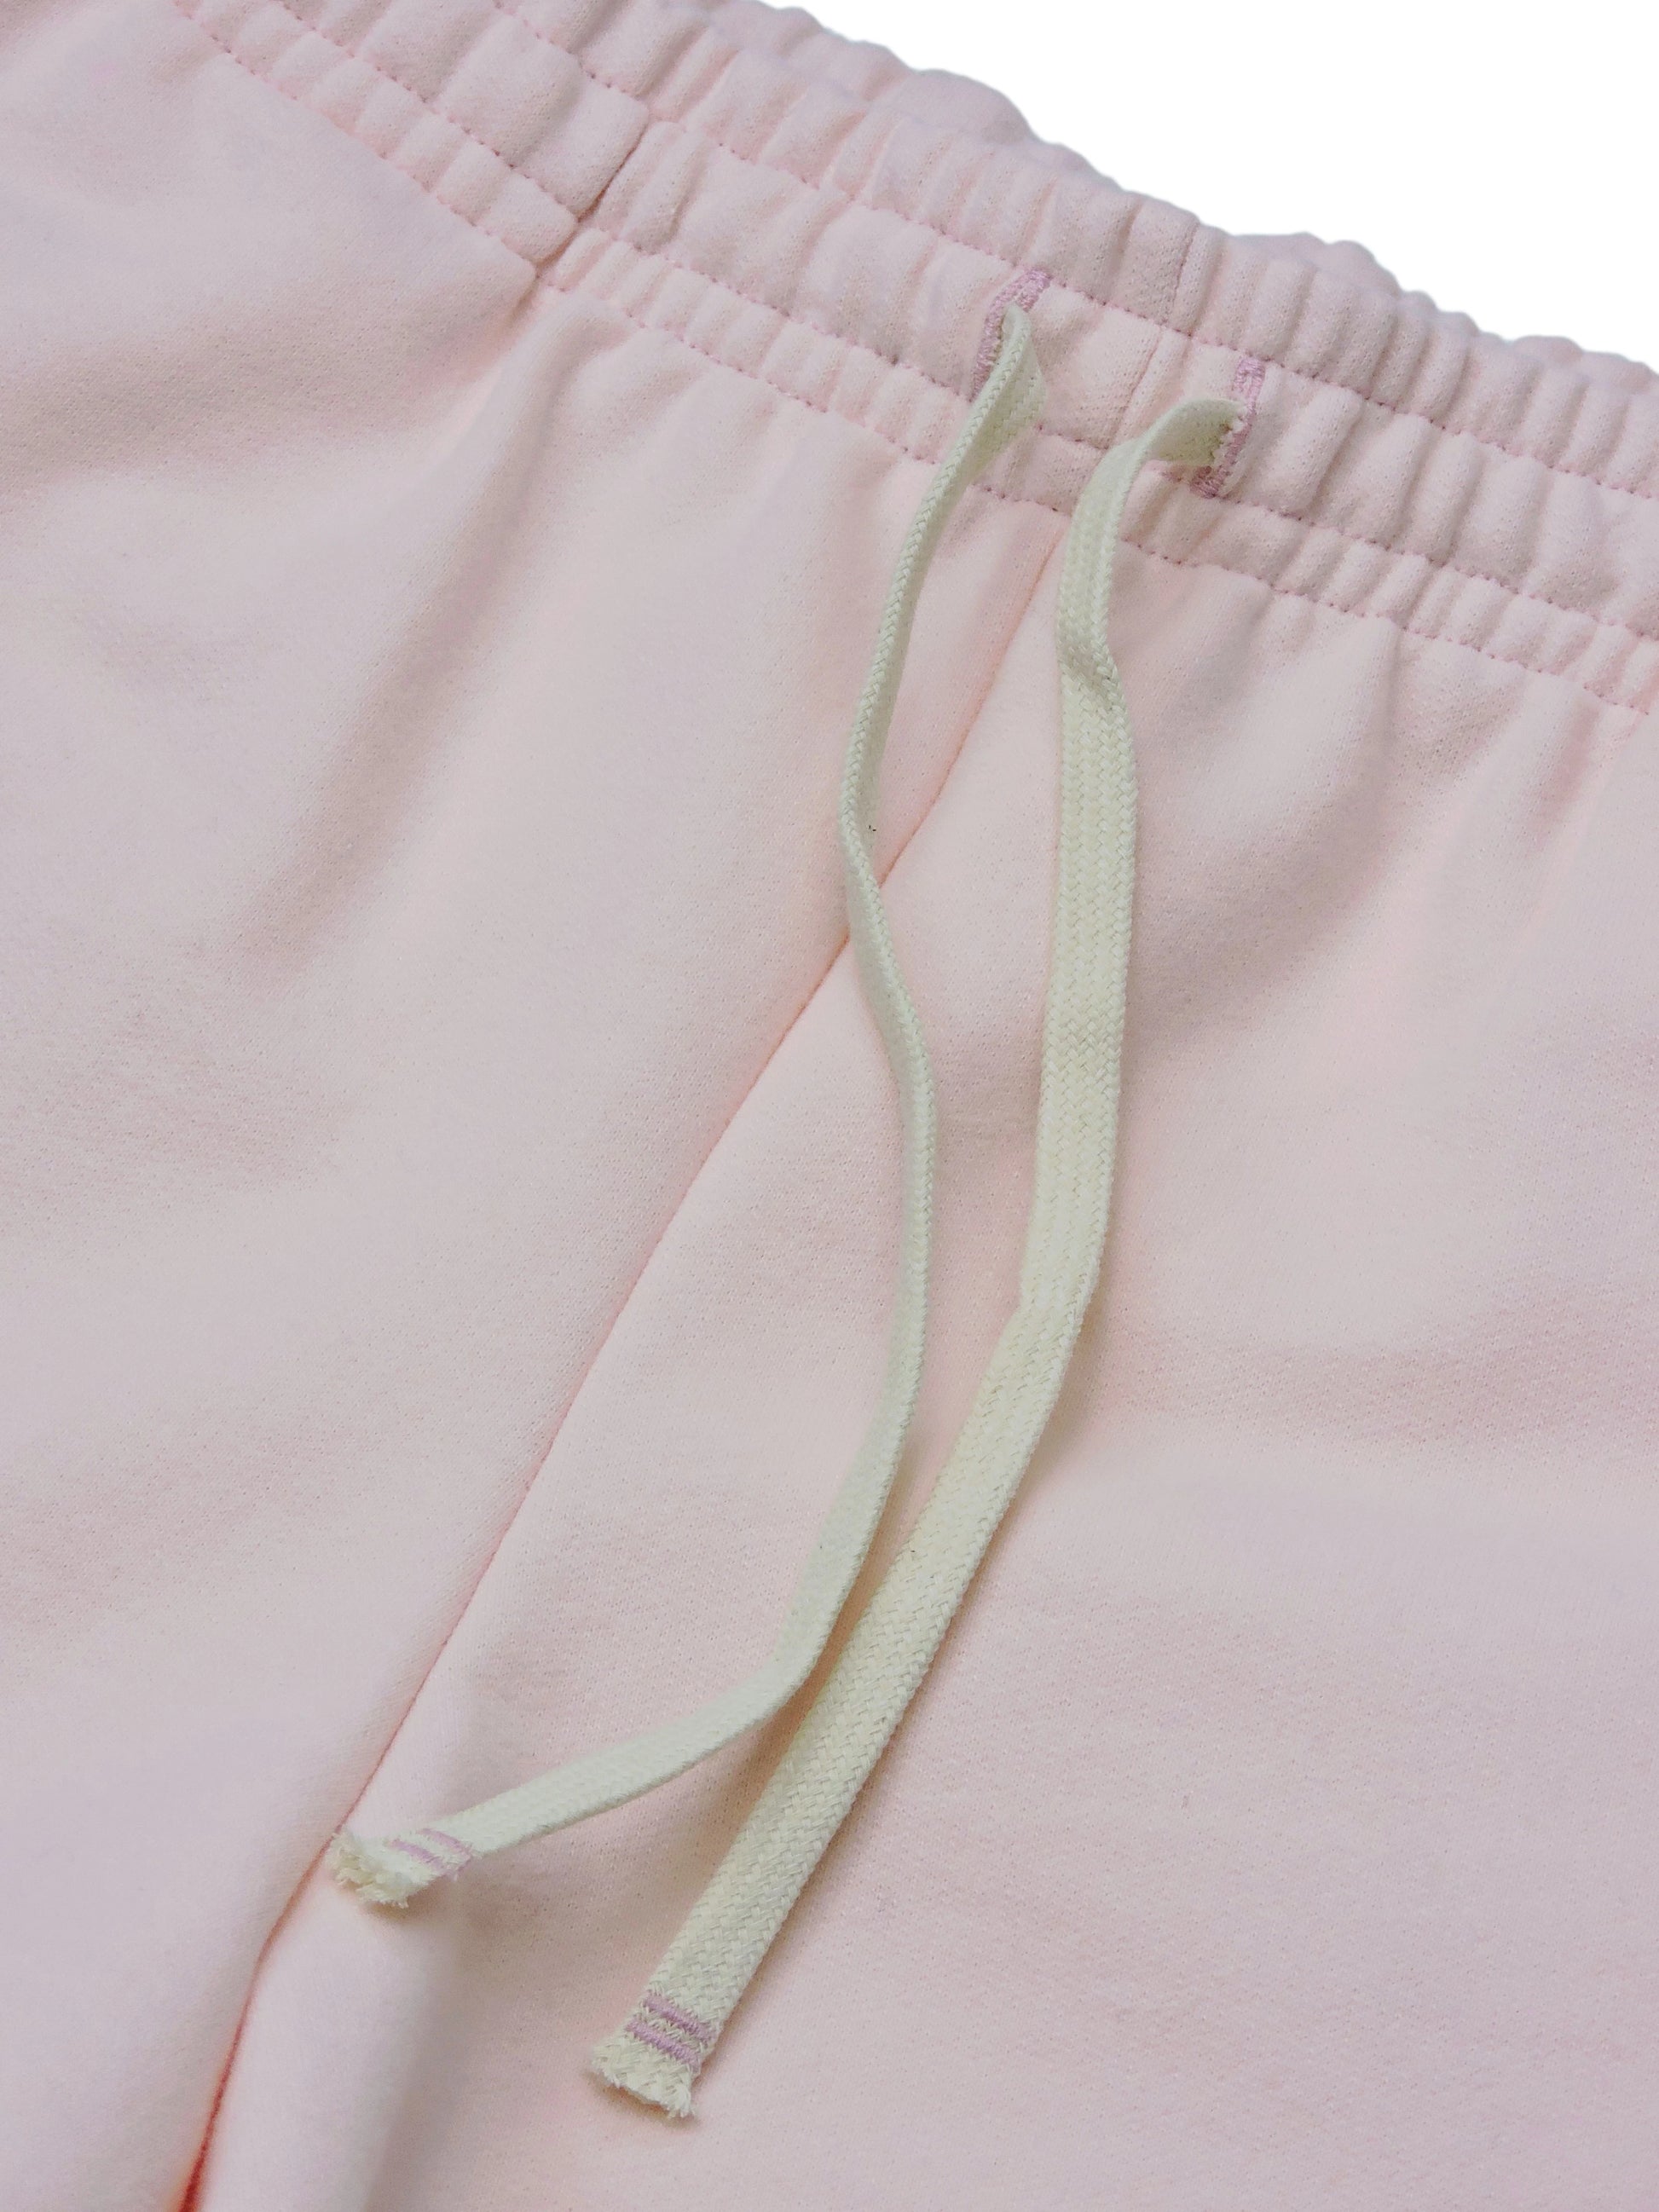 Close up of White Drawstrings of Sweatpants